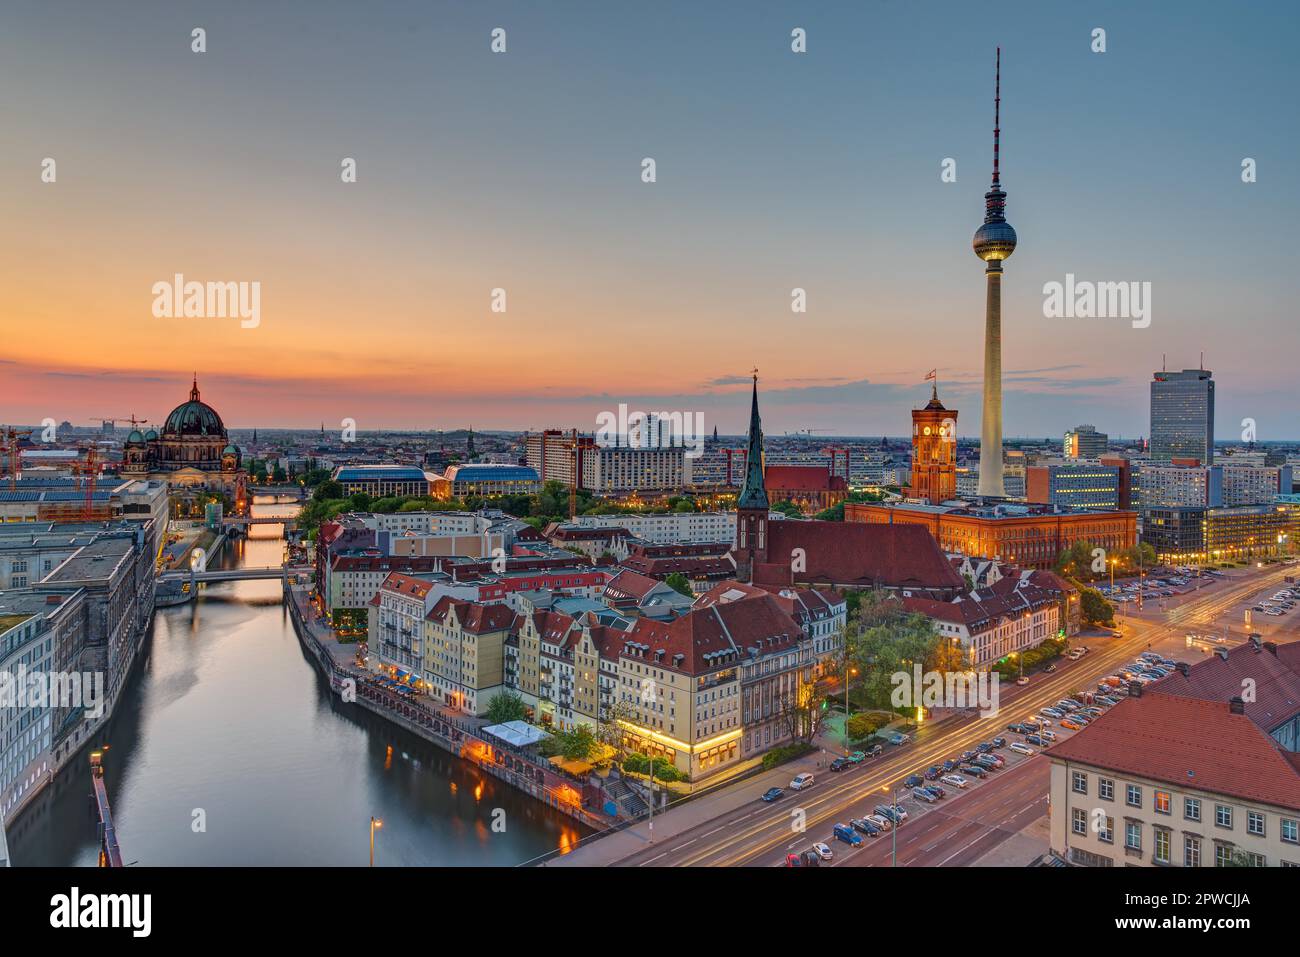 Sonnenuntergang über der Berliner Innenstadt mit dem berühmten Fernsehturm Stockfoto